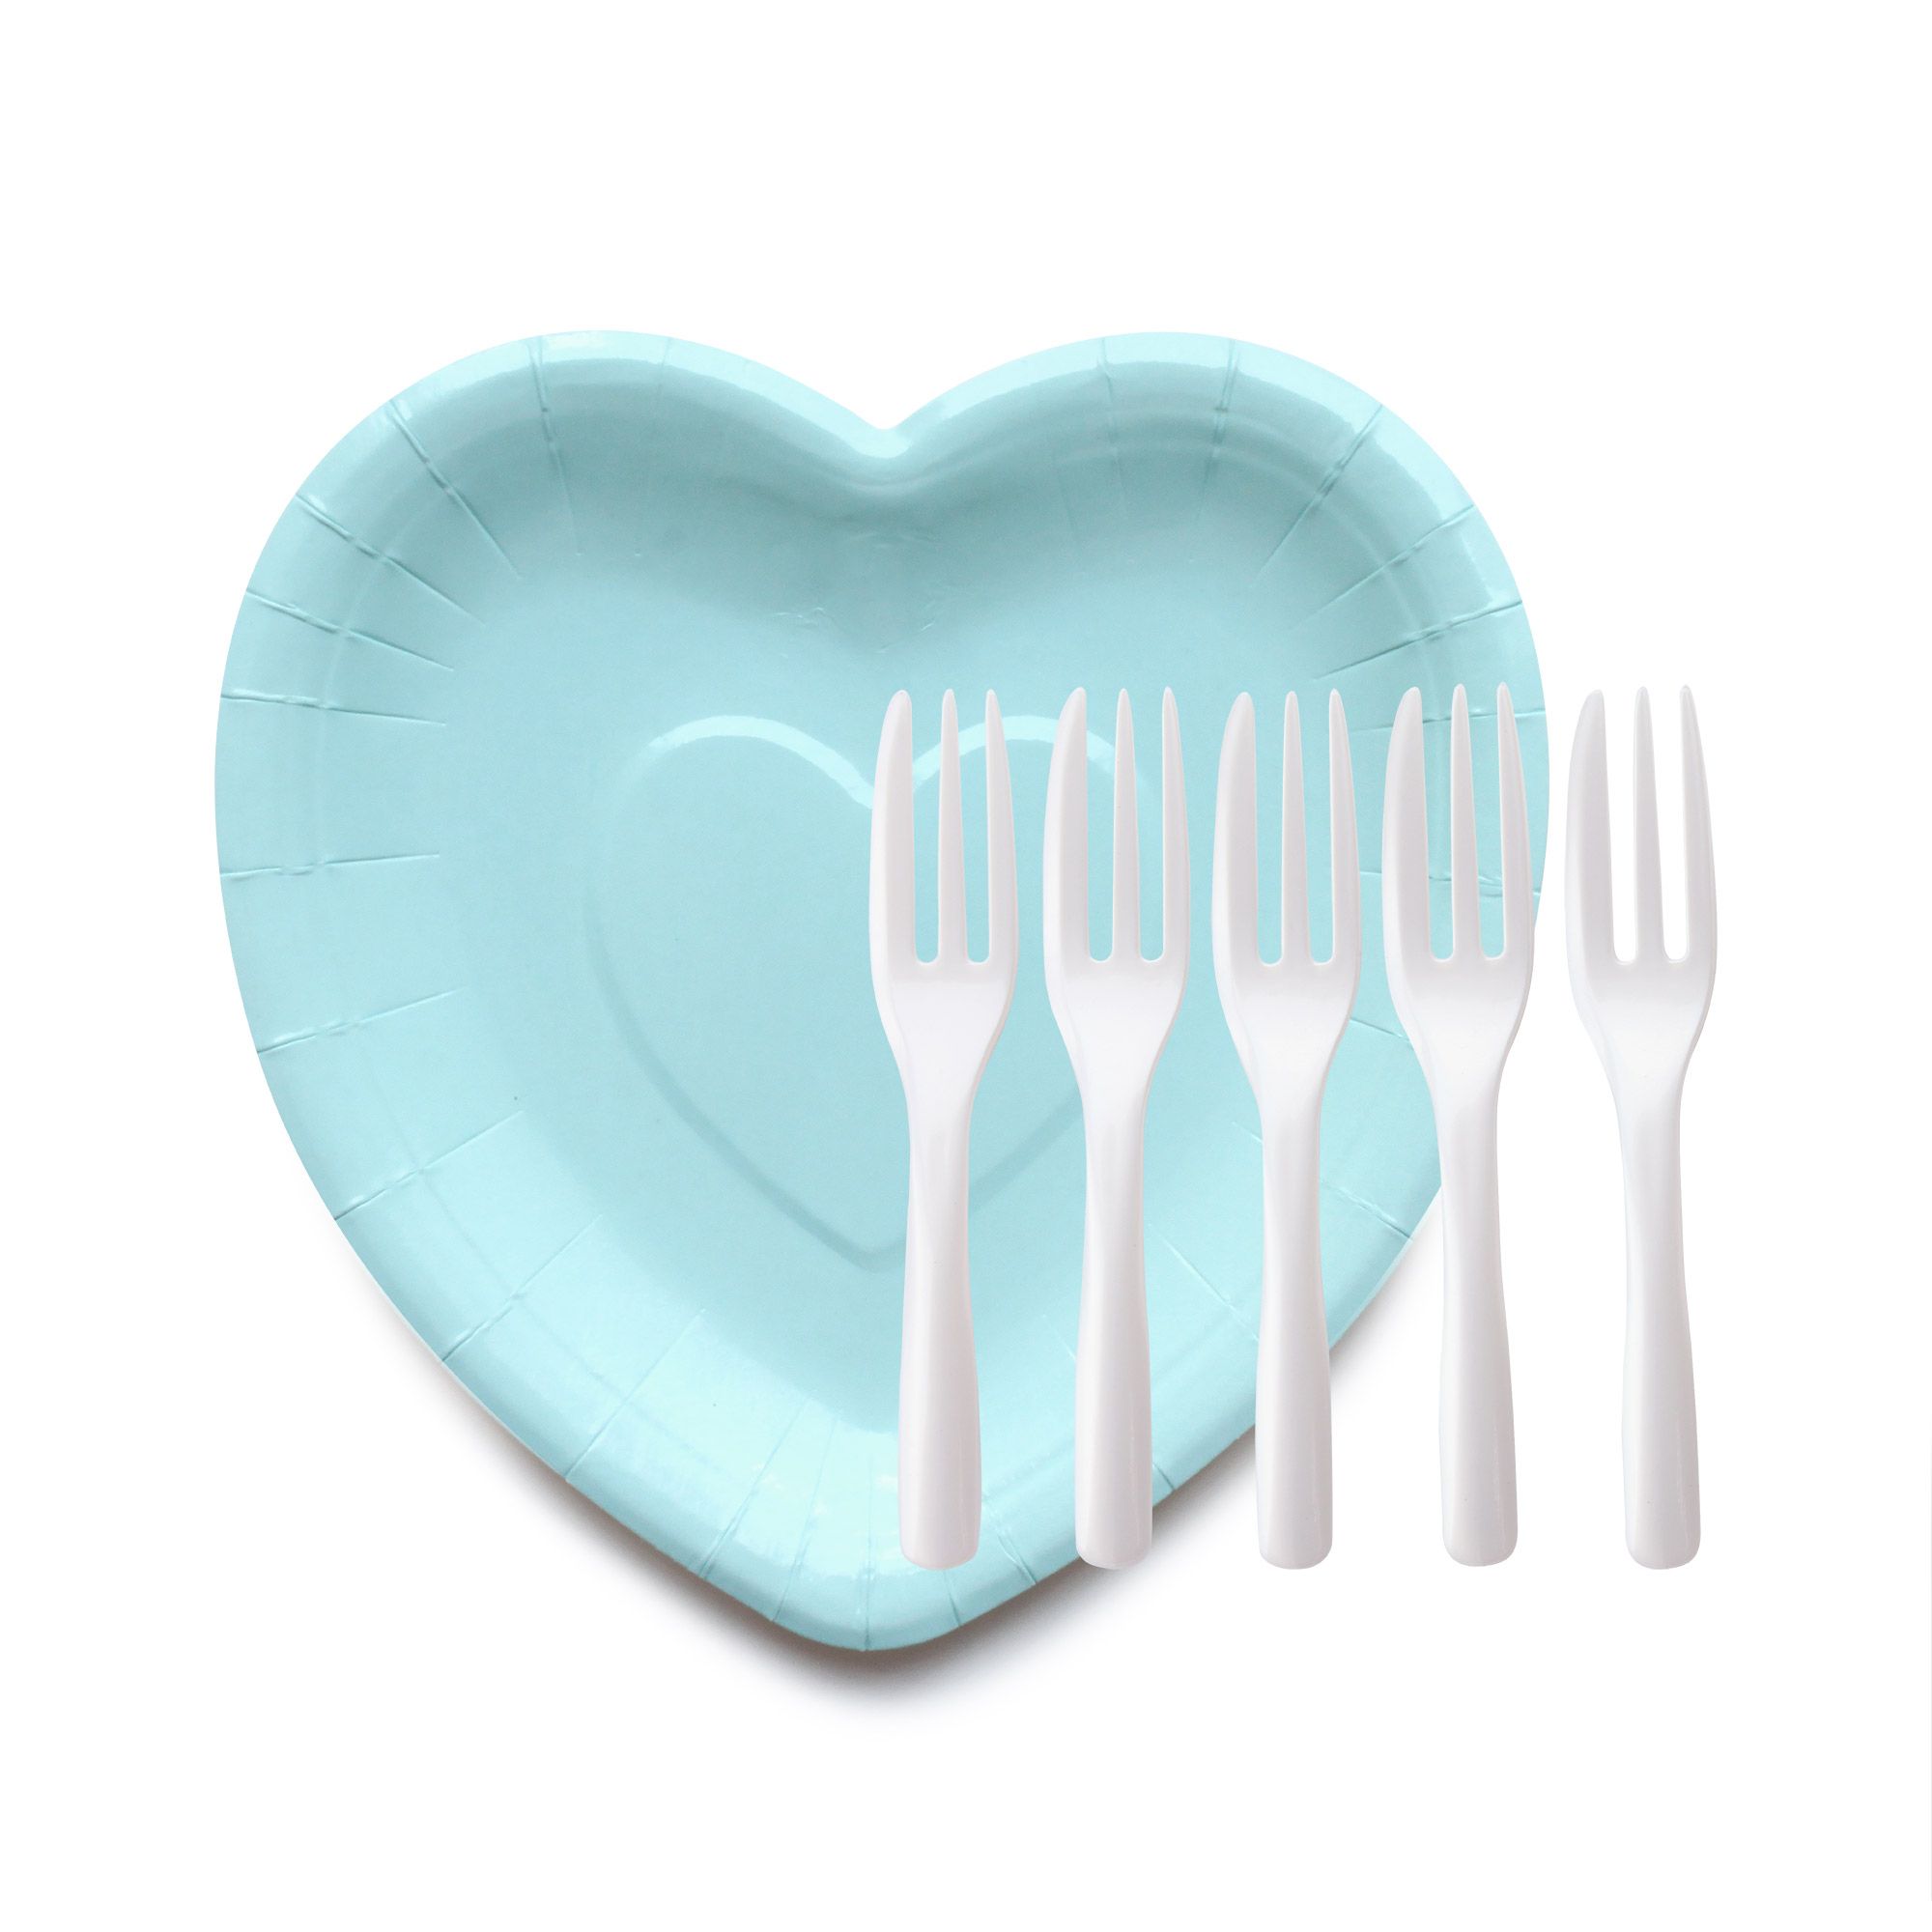 Piatti per torte di carta a forma di cuore BabyBlue con forchette per torte  - Piatti di carta dal design elegante e forchette per torte